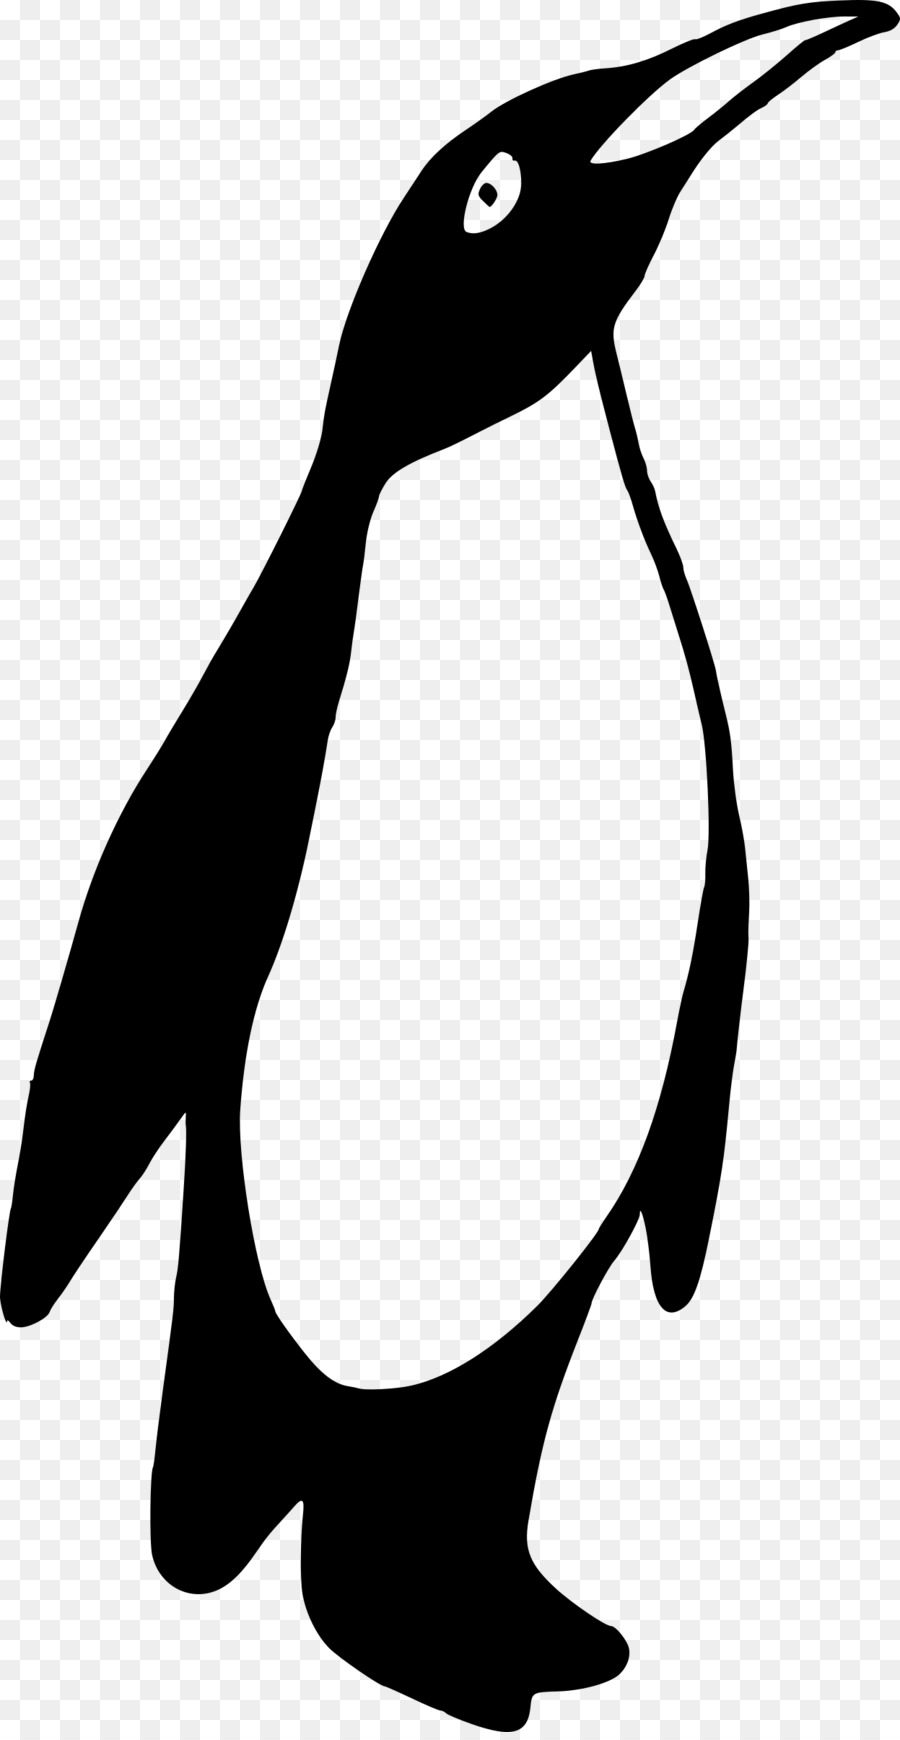 Emperor Penguin Clip art - Penguin png download - 1247*2400 - Free Transparent Penguin png Download.